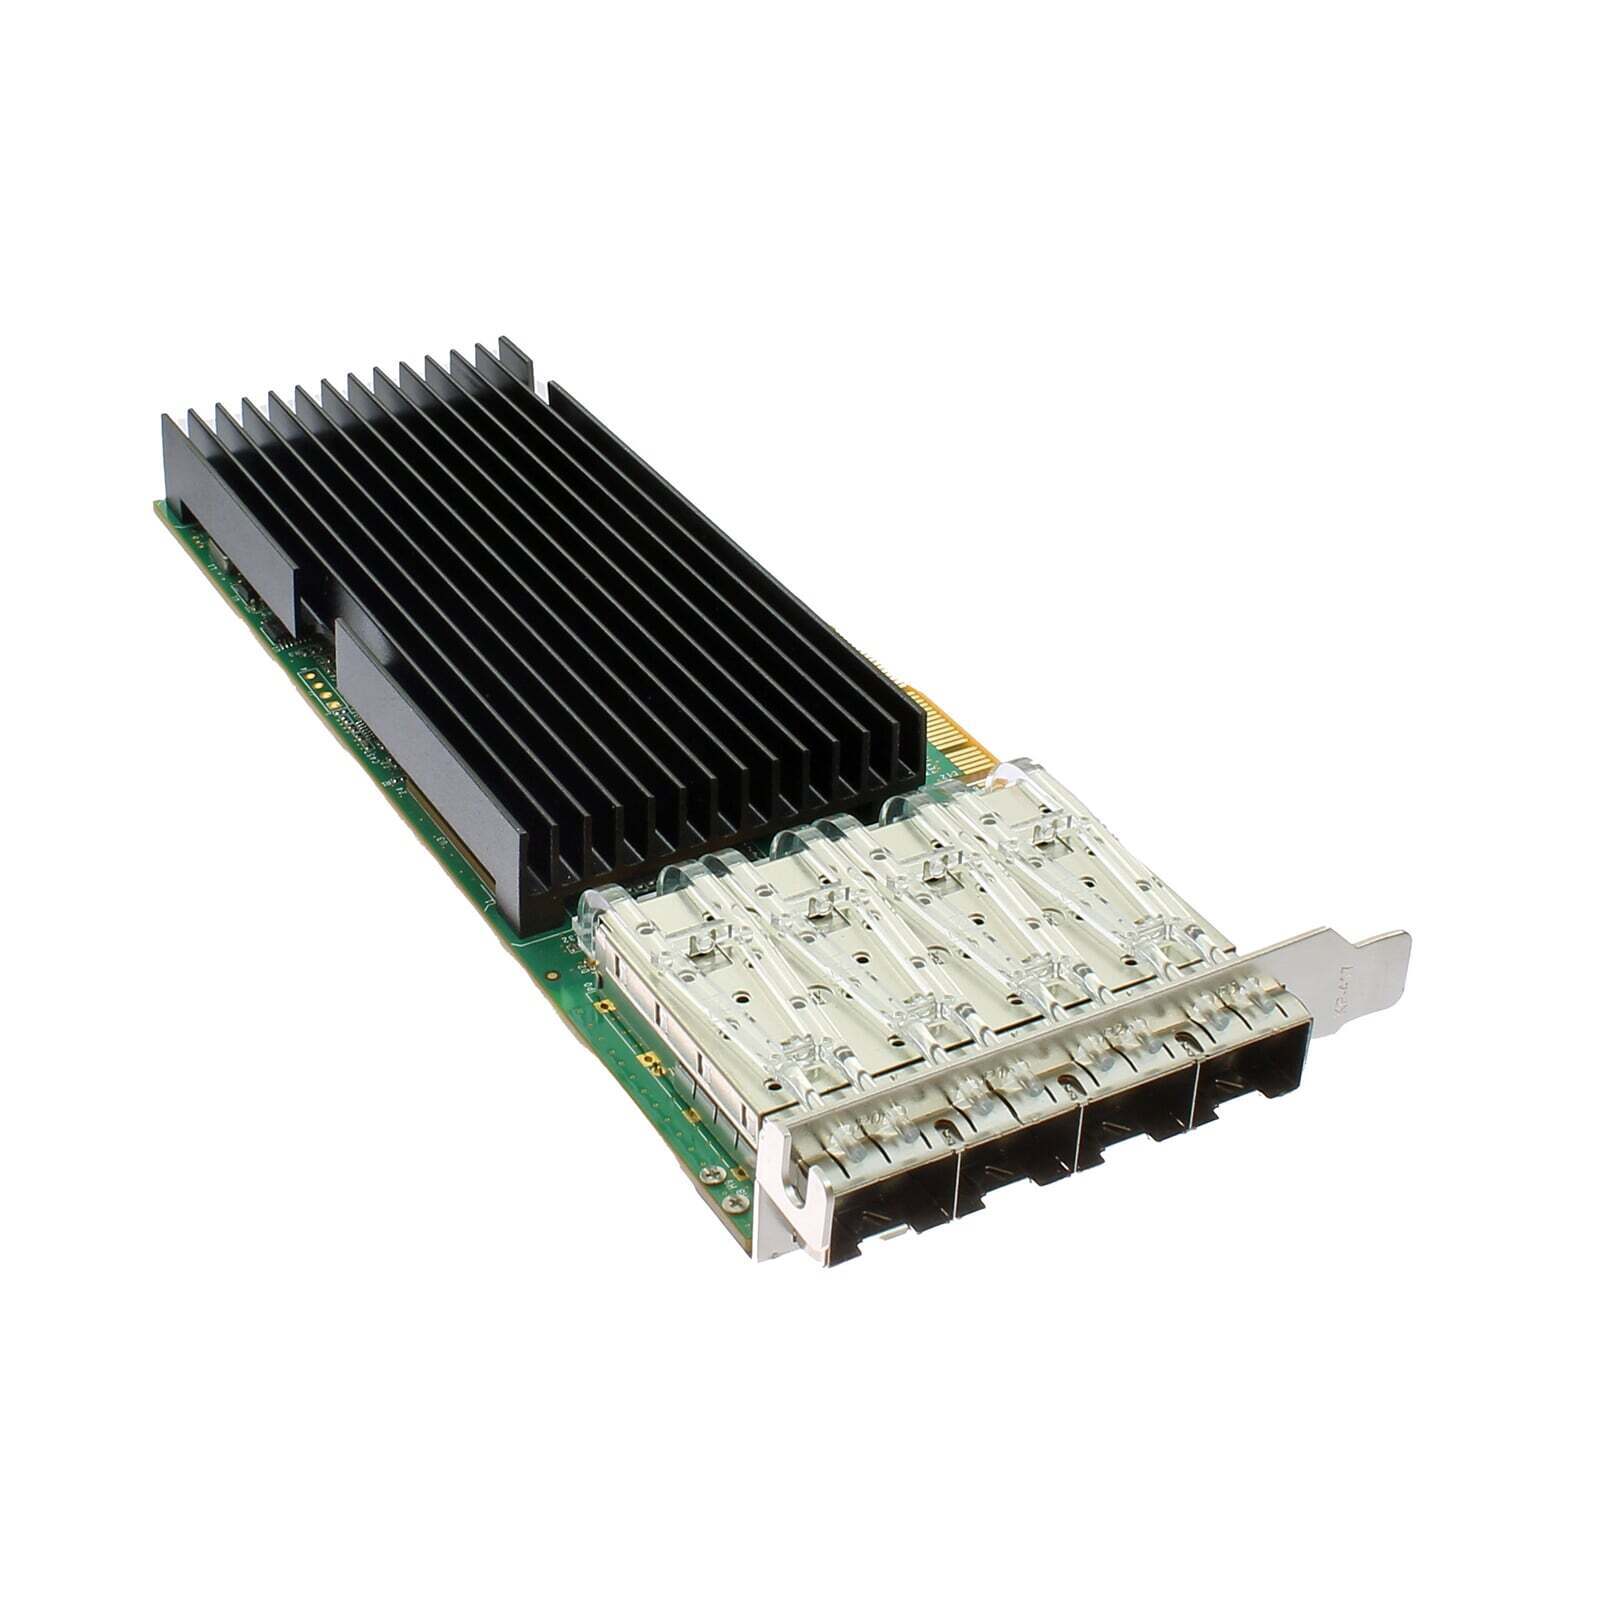 Silicom Network Adapter Quad Port 10GbE PCI-E LP - PE310G4SPI9LB-XR